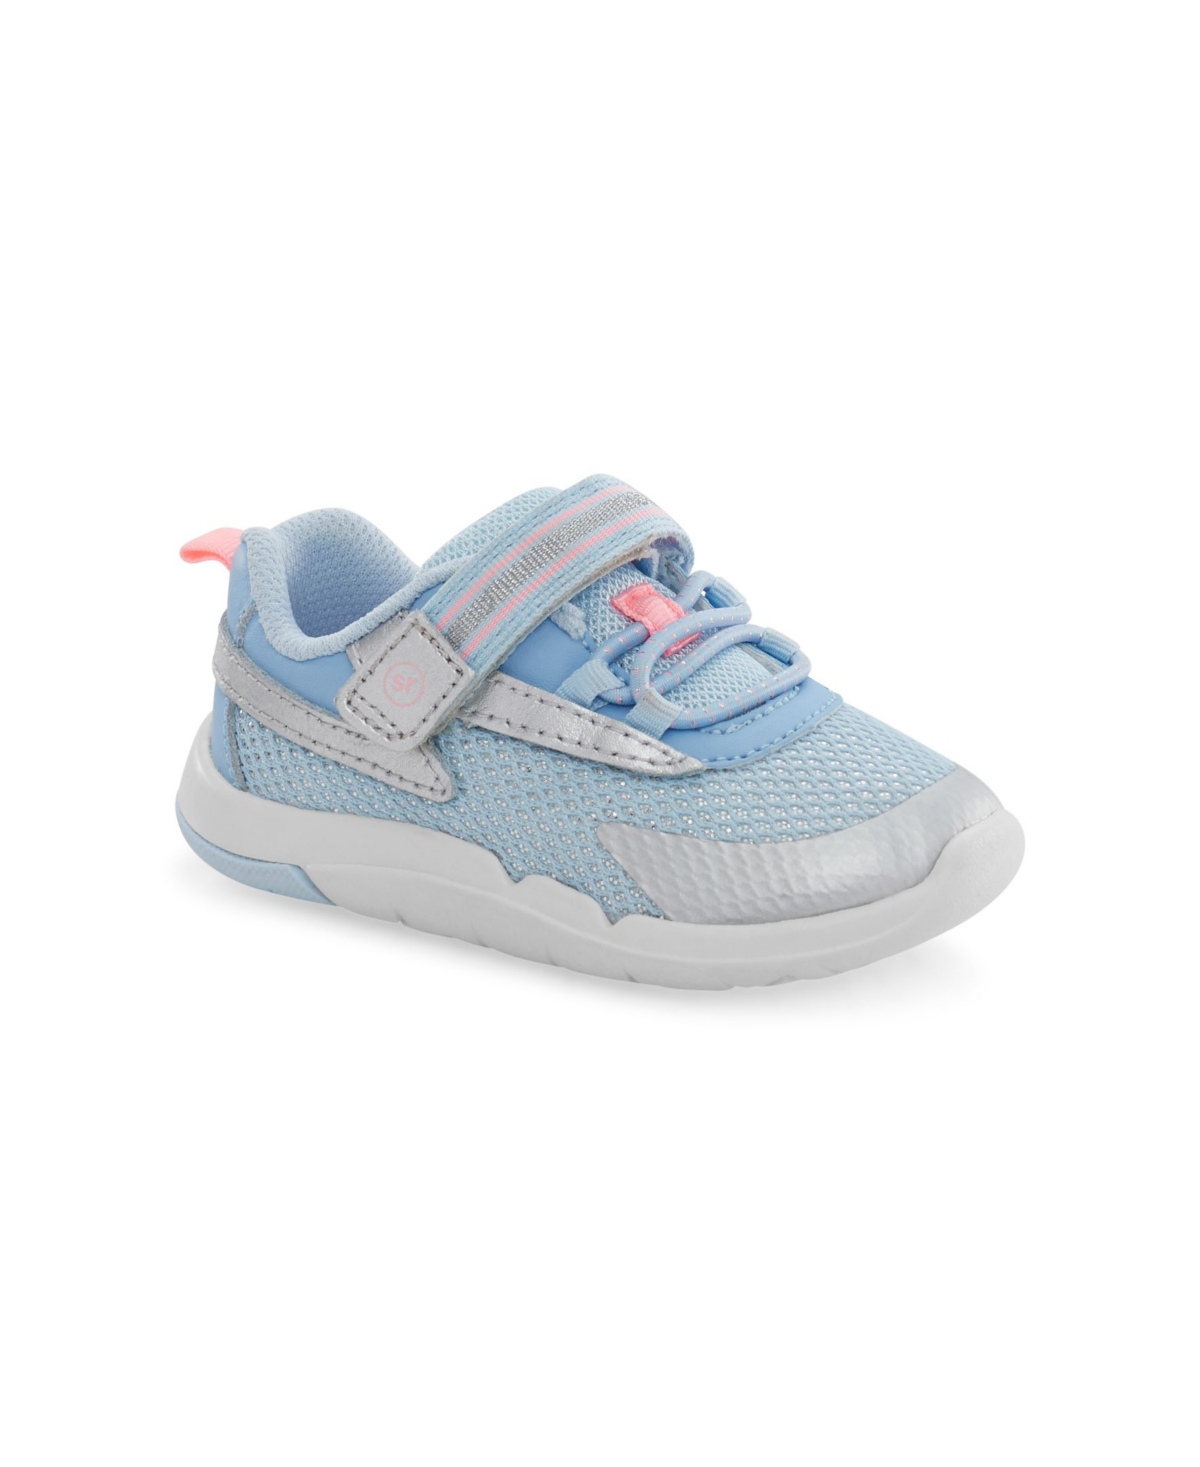 Stride Rite Baby Girls Srt Ian Apma Approved Sneakers In Light Blue